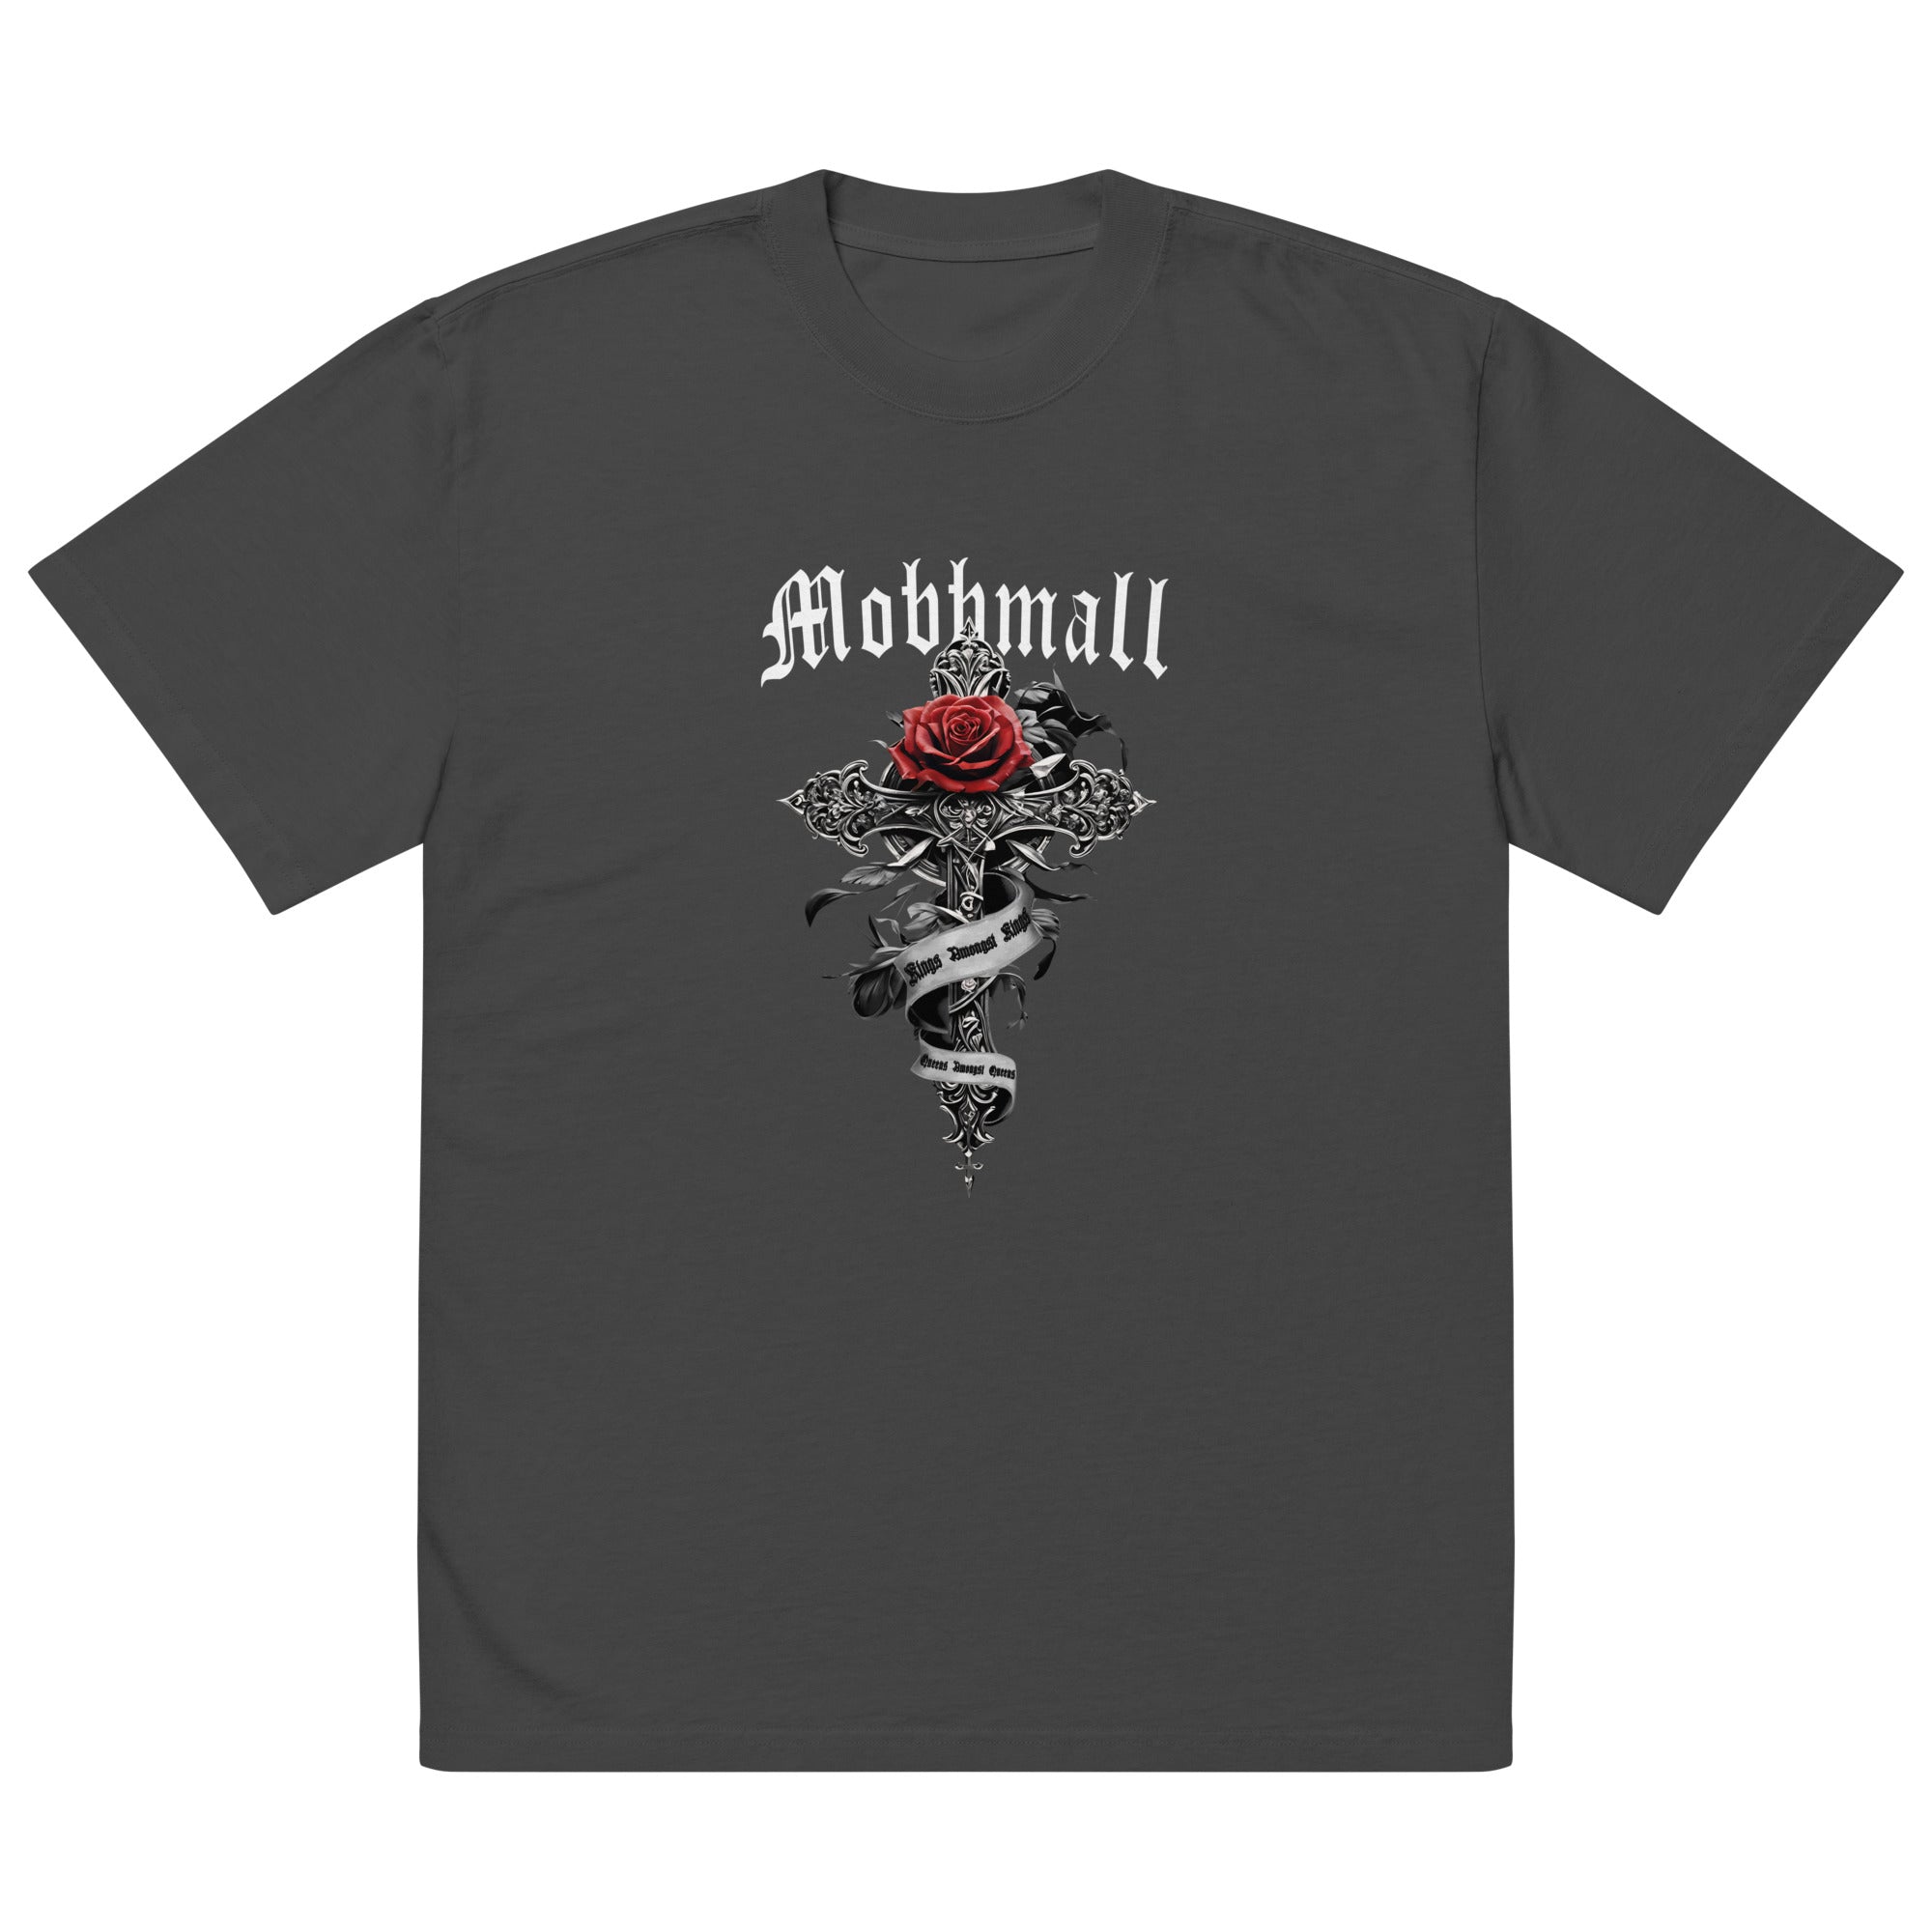 MobbMall's Cross w/ Oversized faded t-shirt